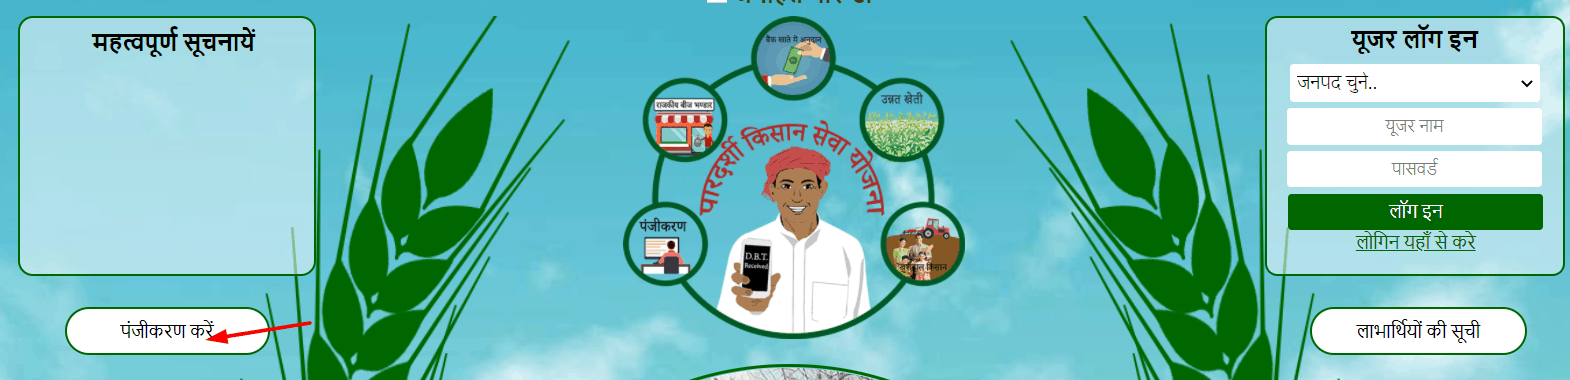 यूपी-किसान-कल्याण मिशन-ऑनलाइन-रजिस्ट्रेशन